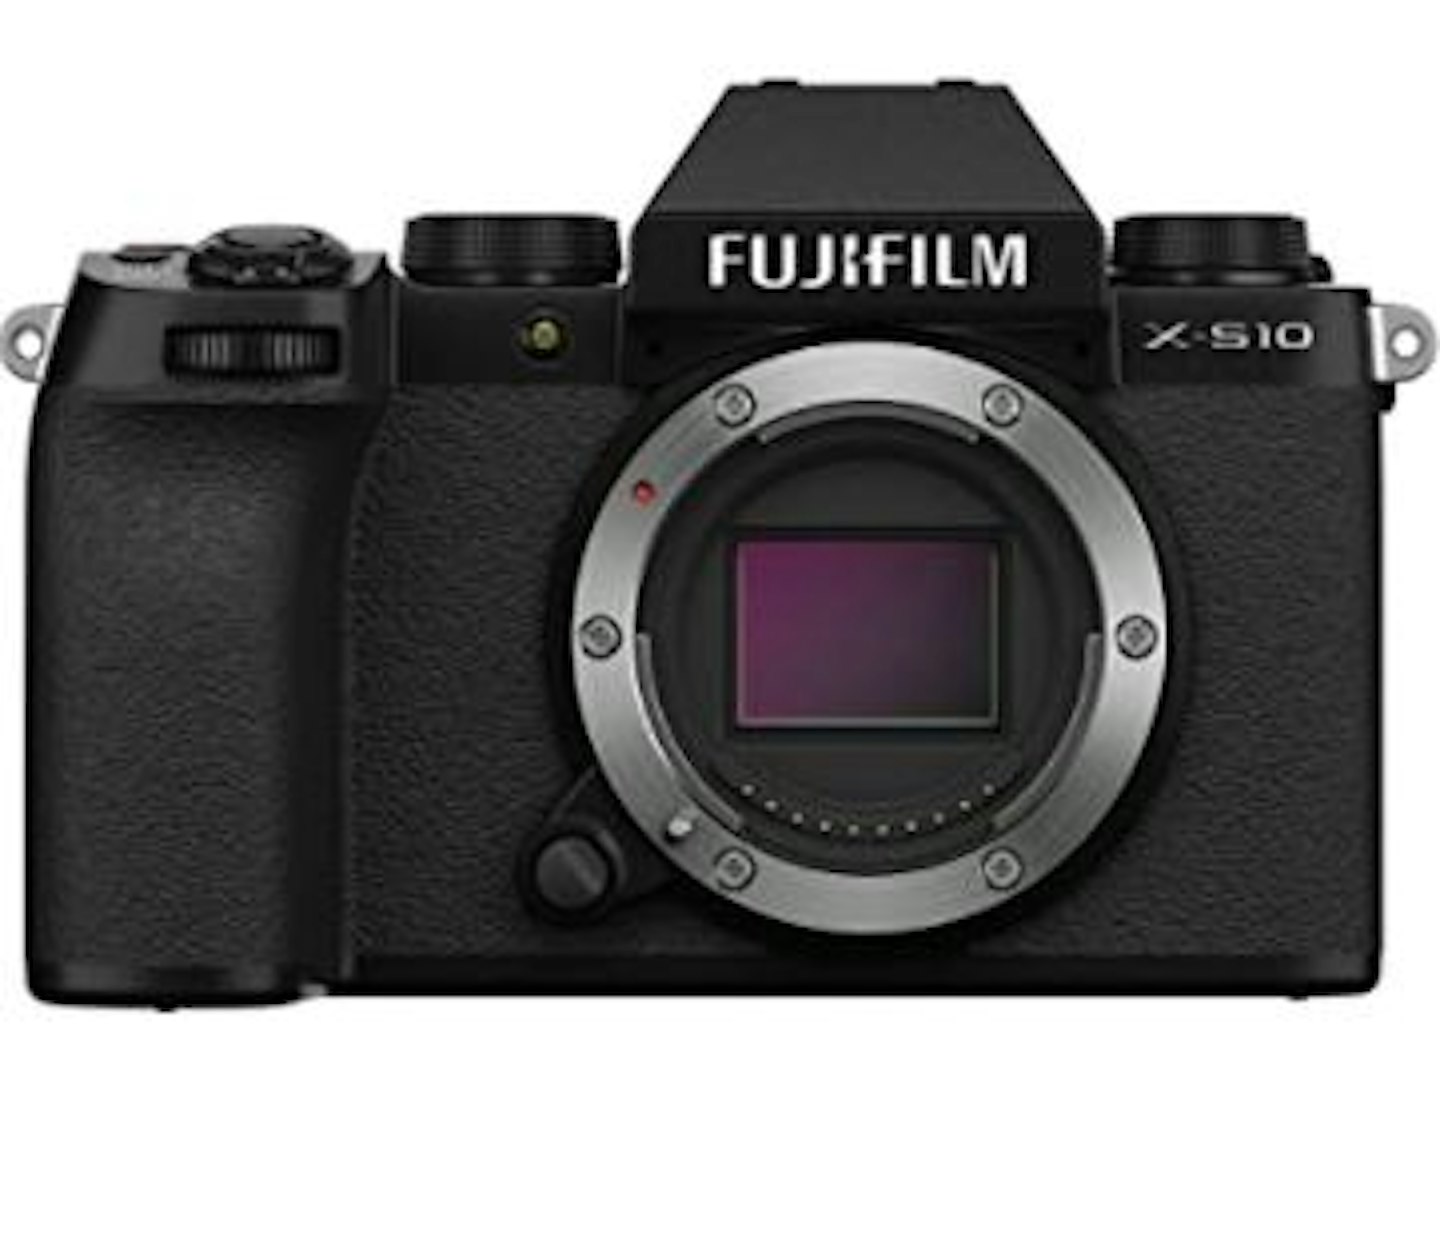 Fujifilm X-S10 Digital Camera Body